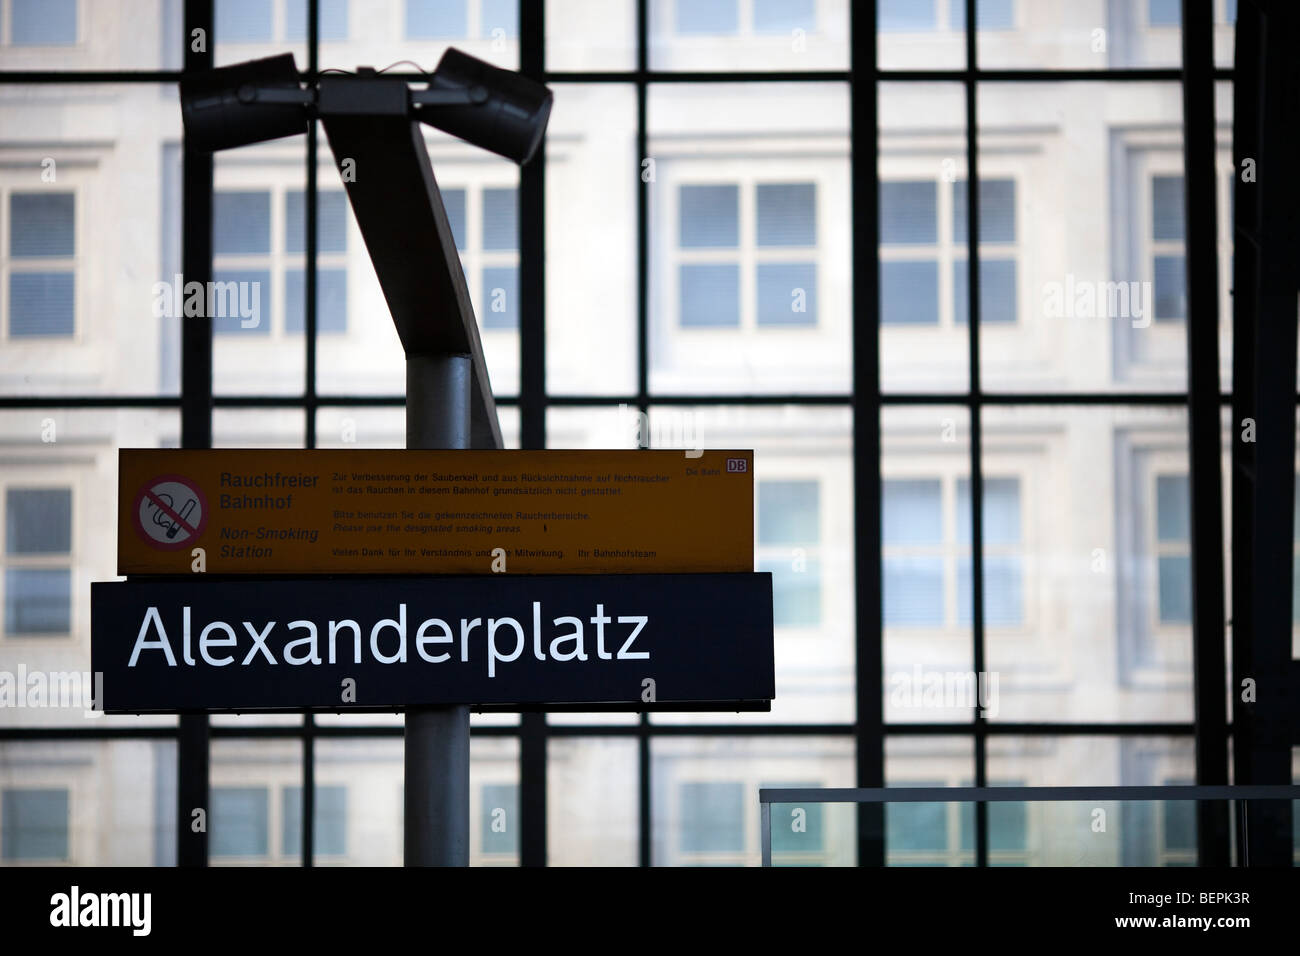 Sign of Alexanderplatz railway station, Berlin, Germany Stock Photo